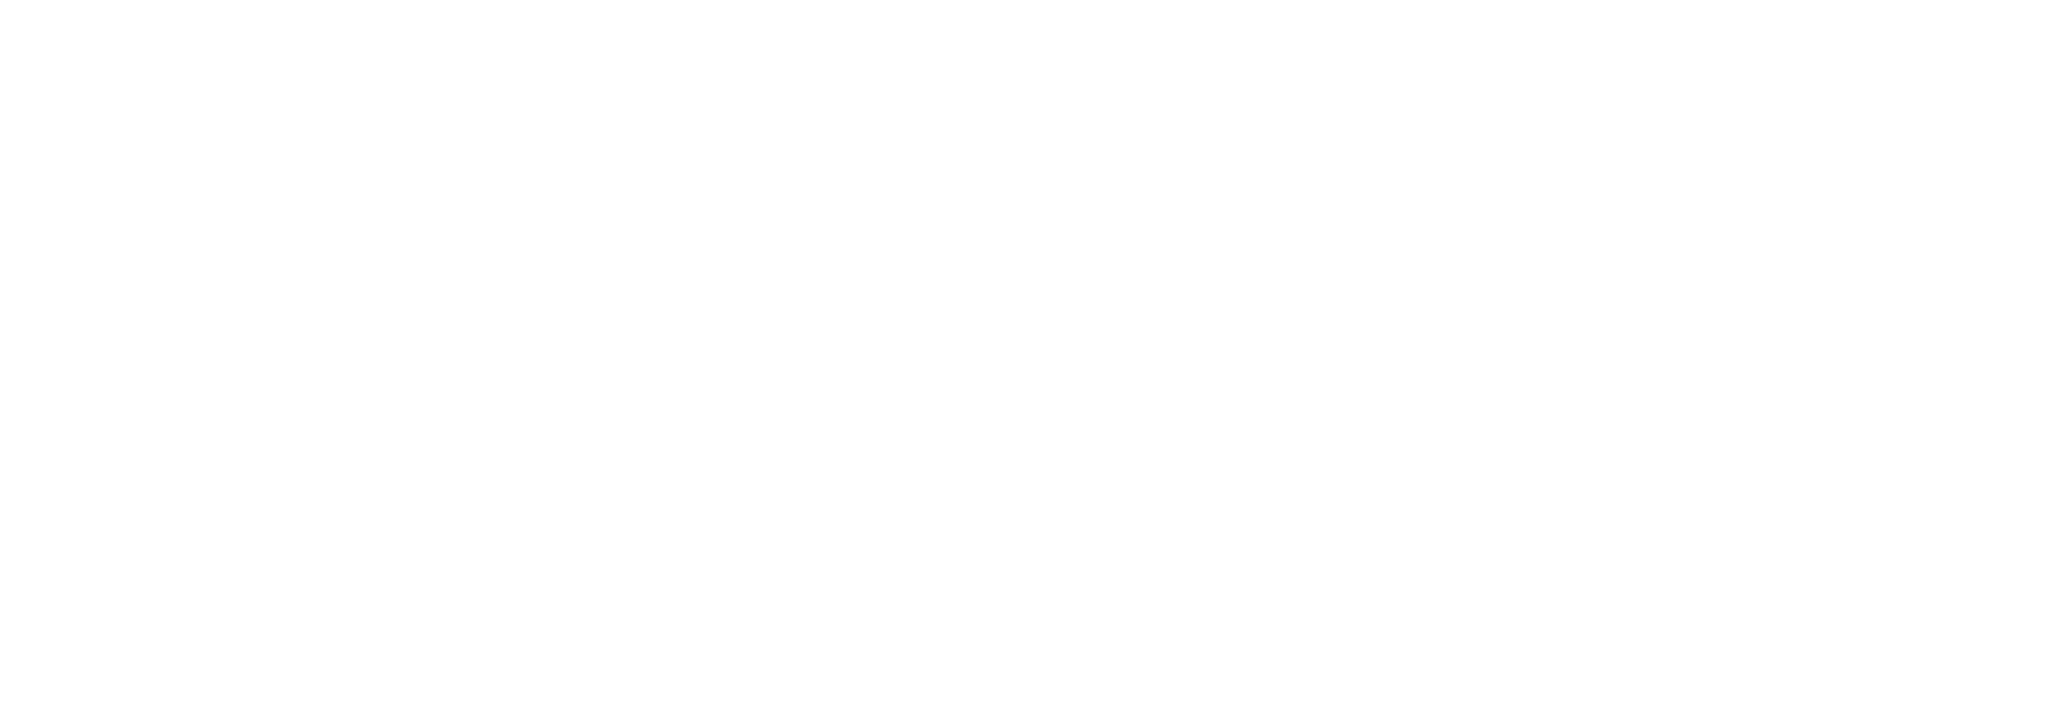 Programa ayudas Kit Digital. Gobierno de España